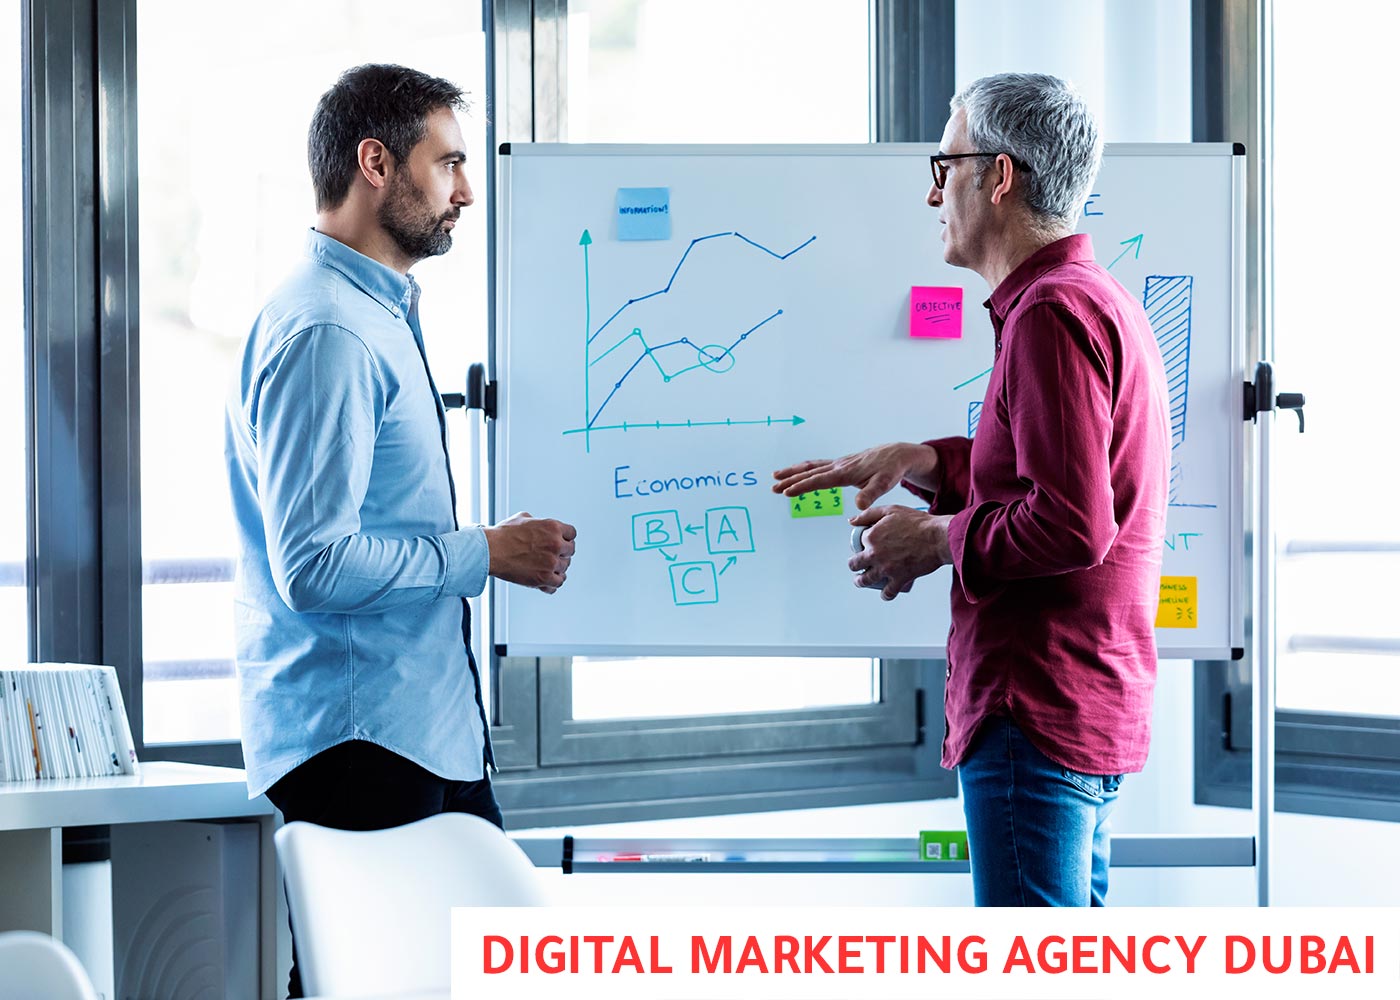 Providing Online / Digital Marketing Services as a Freelancer - Part 1